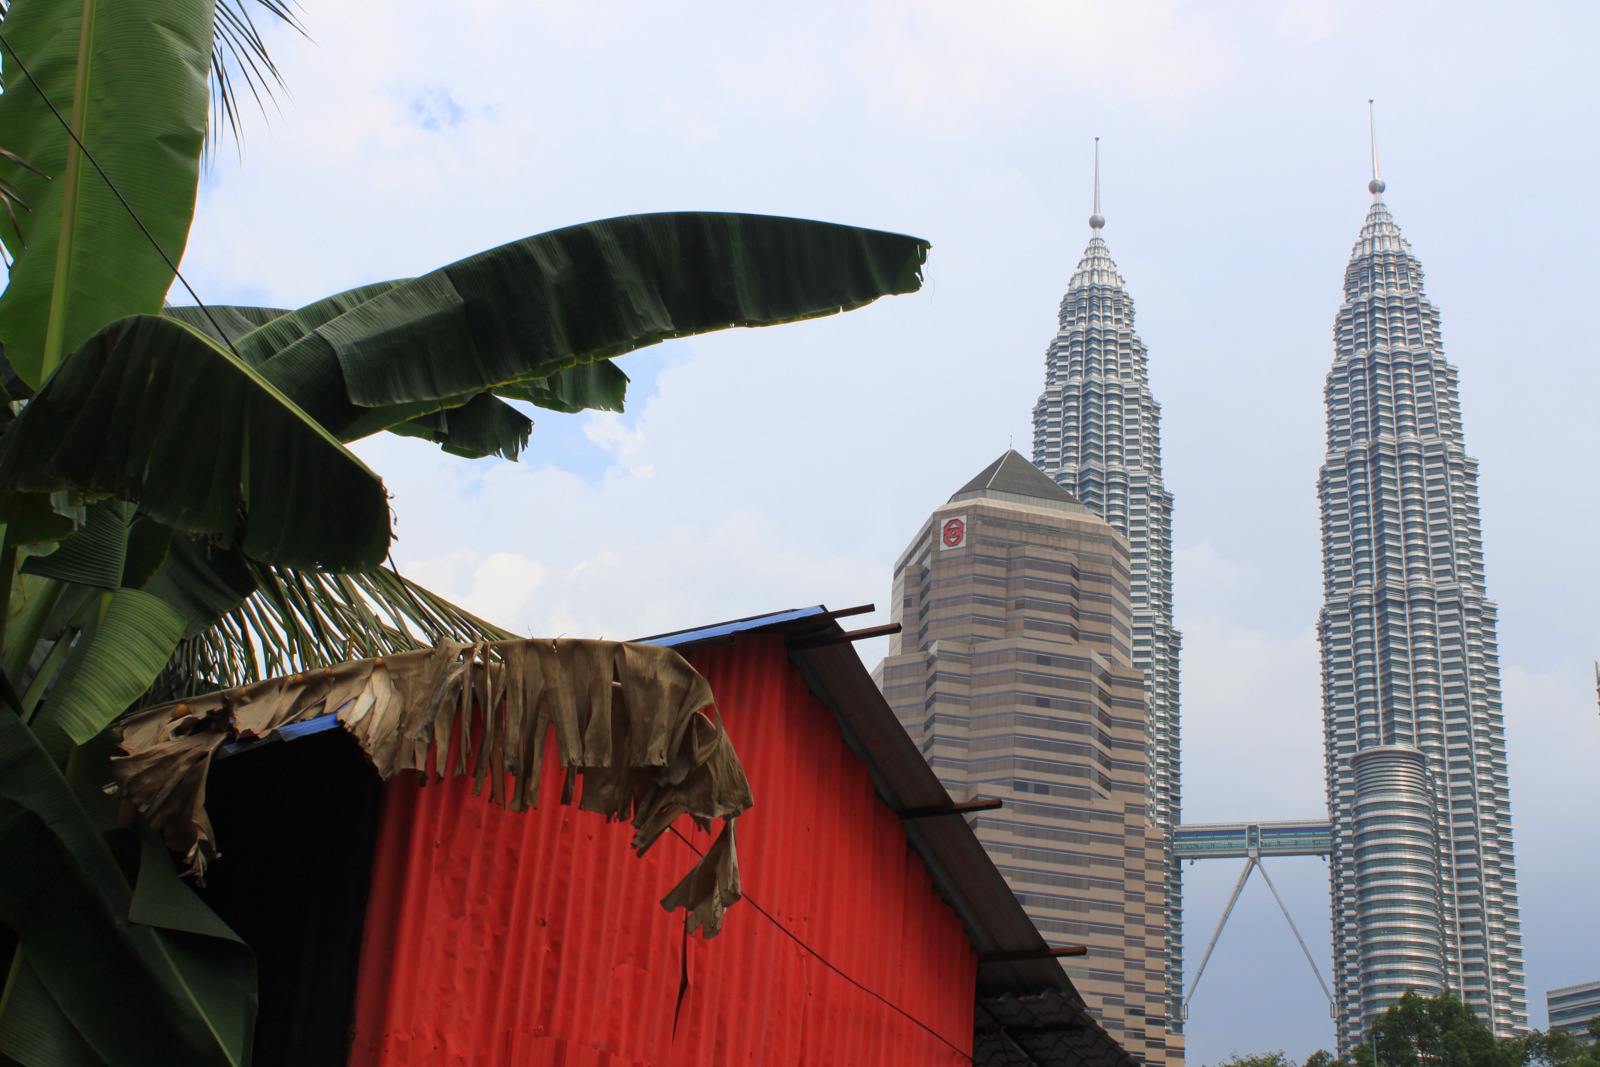 Kampung Baru - Kuala Lumpur